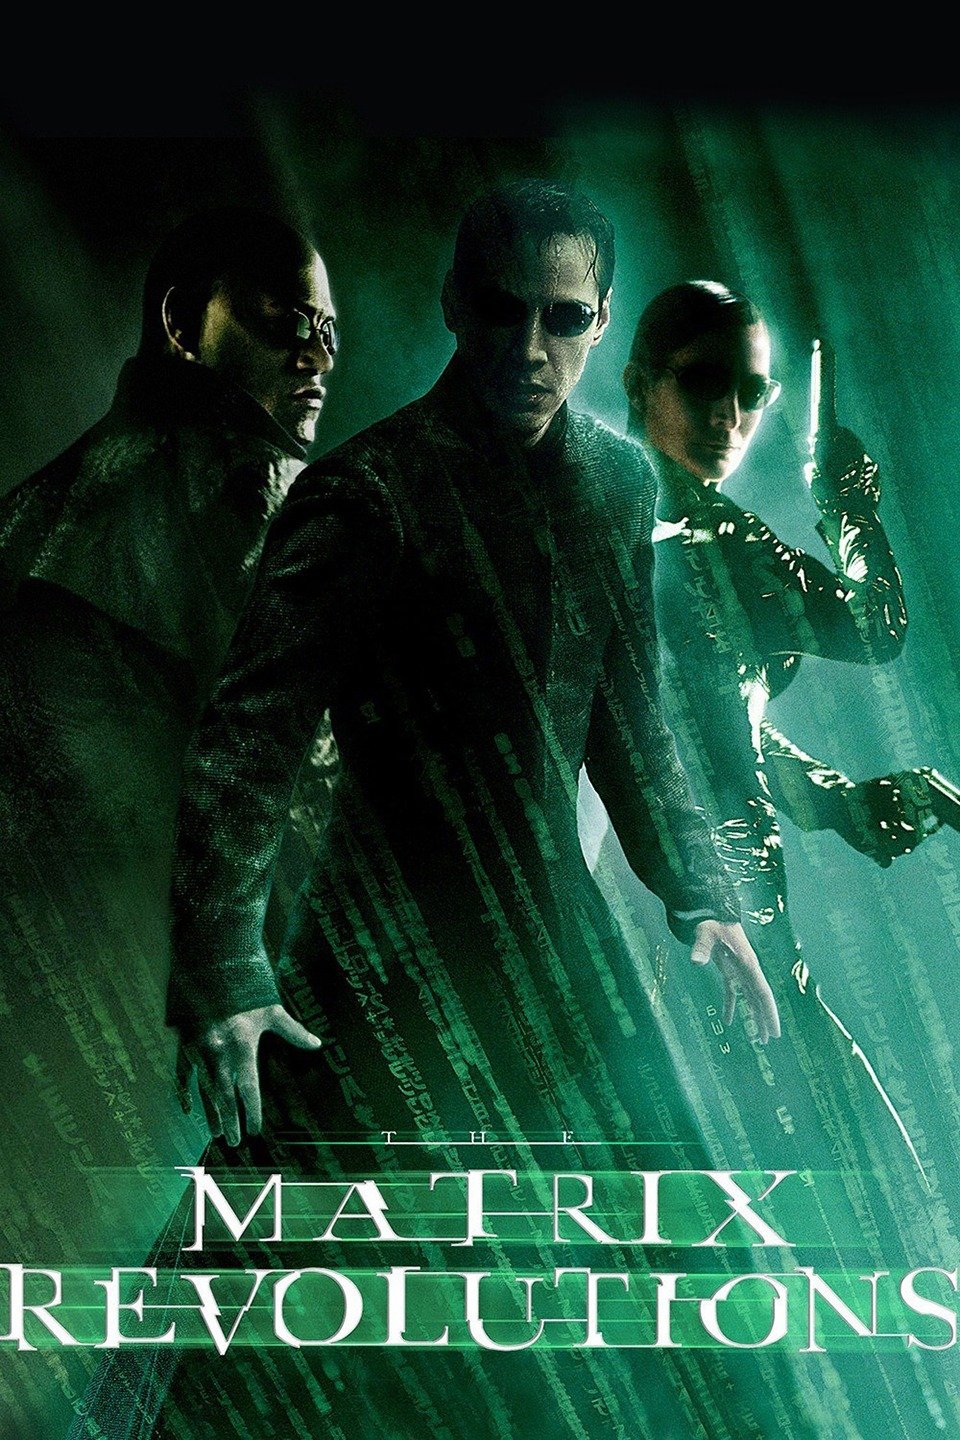 [MINI Super-HQ] The Matrix Revolutions (2003) เดอะเมทริกซ์ ภาค 3 ปฏิวัติมนุษย์เหนือโลก [1080p] [พากย์ไทย 5.1 + อังกฤษ DTS] [บรรยายไทย + อังกฤษ] [เสียงไทย + ซับไทย] [ONE2UP]